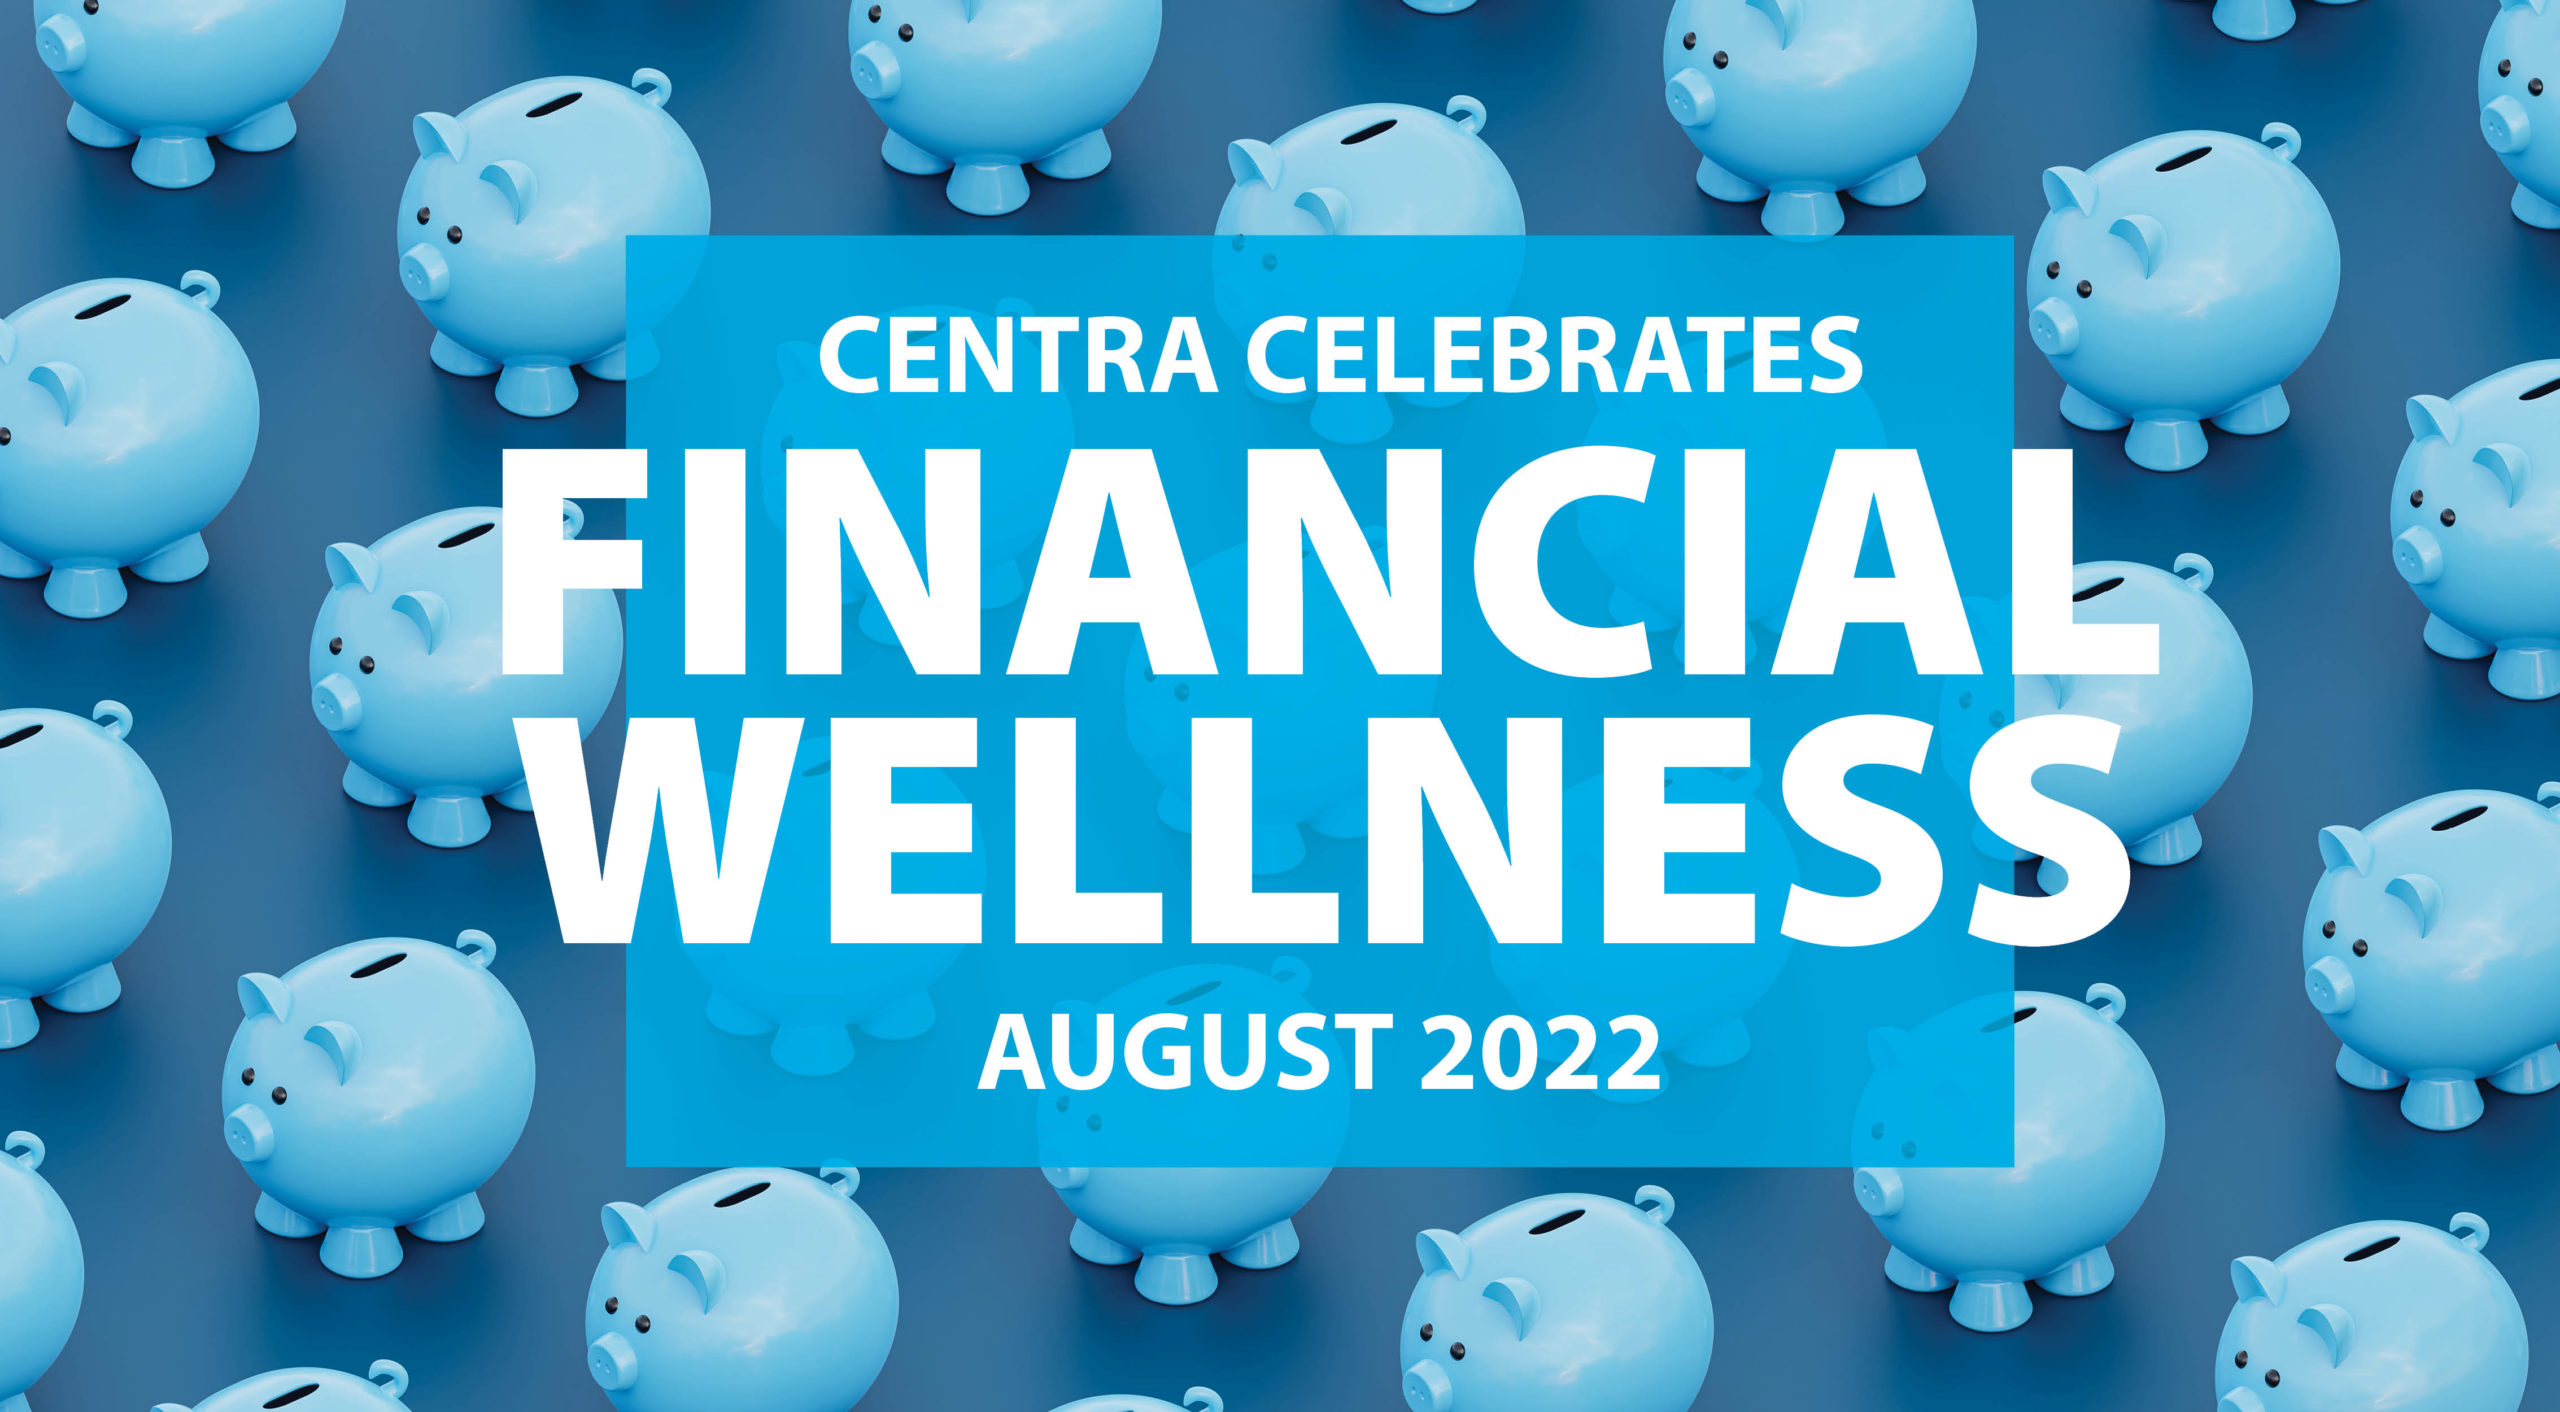 Celebrating financial wellness